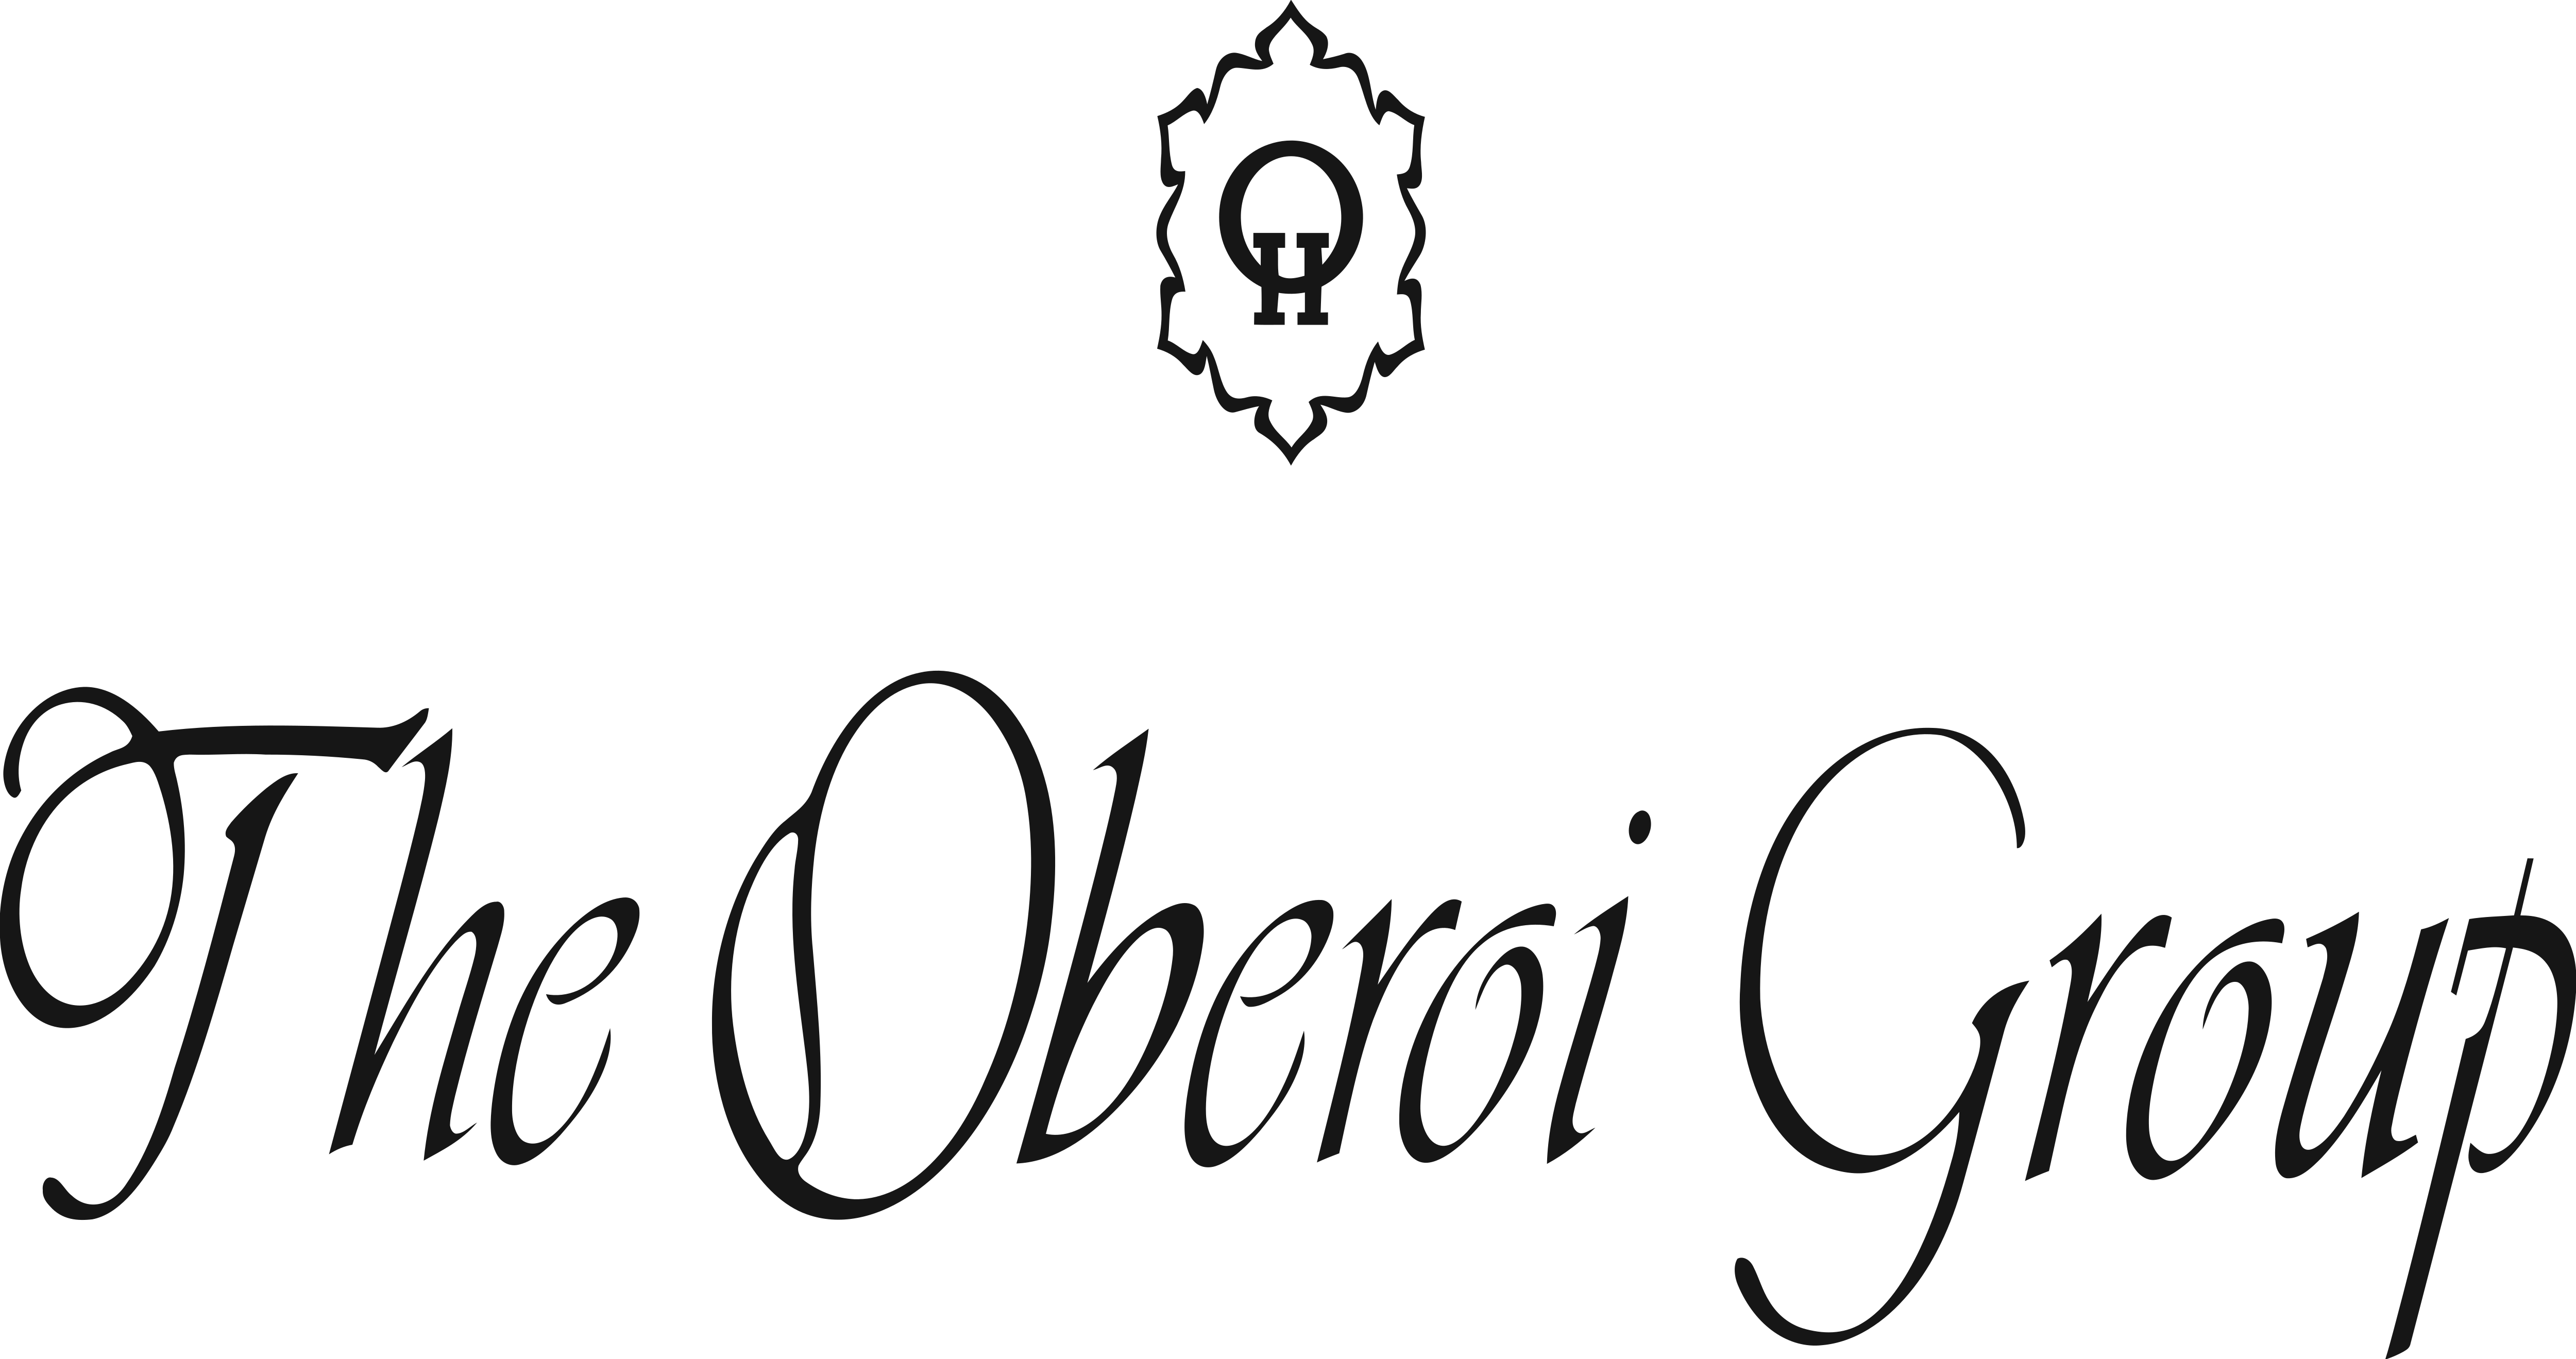 The Oberoi Concours d'Elegance